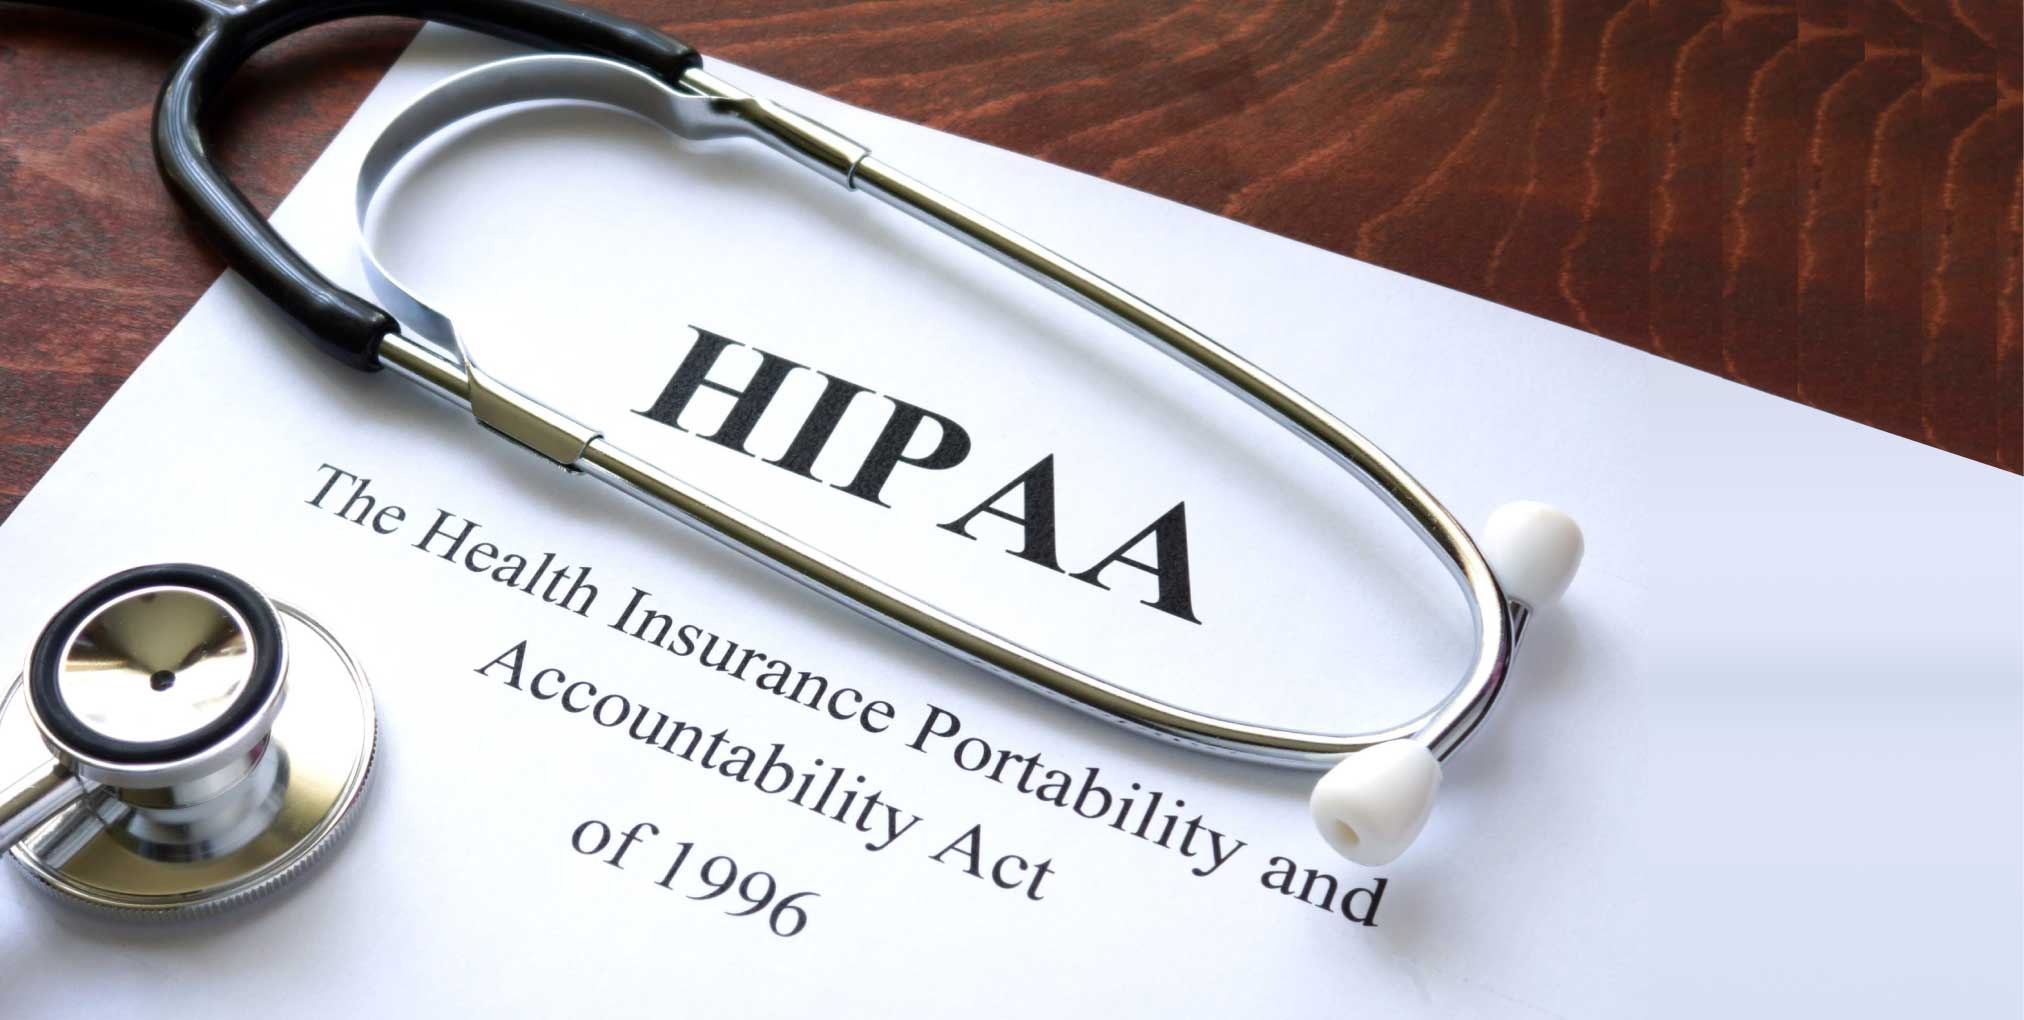 What is HIPAA Compliance?